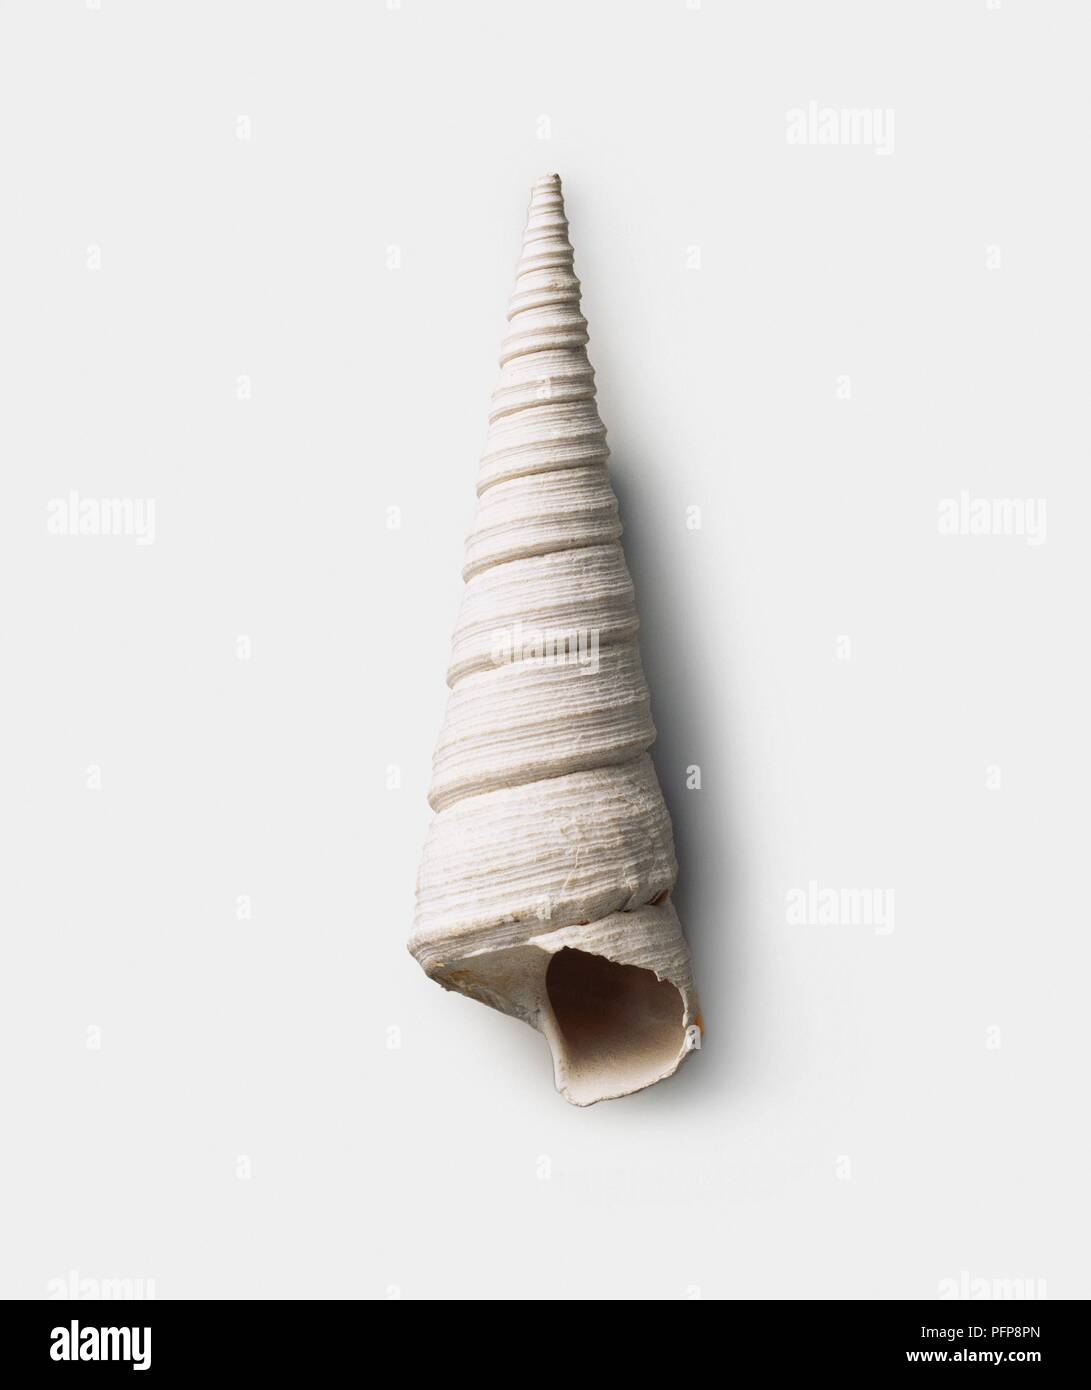 Archimediella pontoni (Turritella) shell, Pliocene Foto Stock